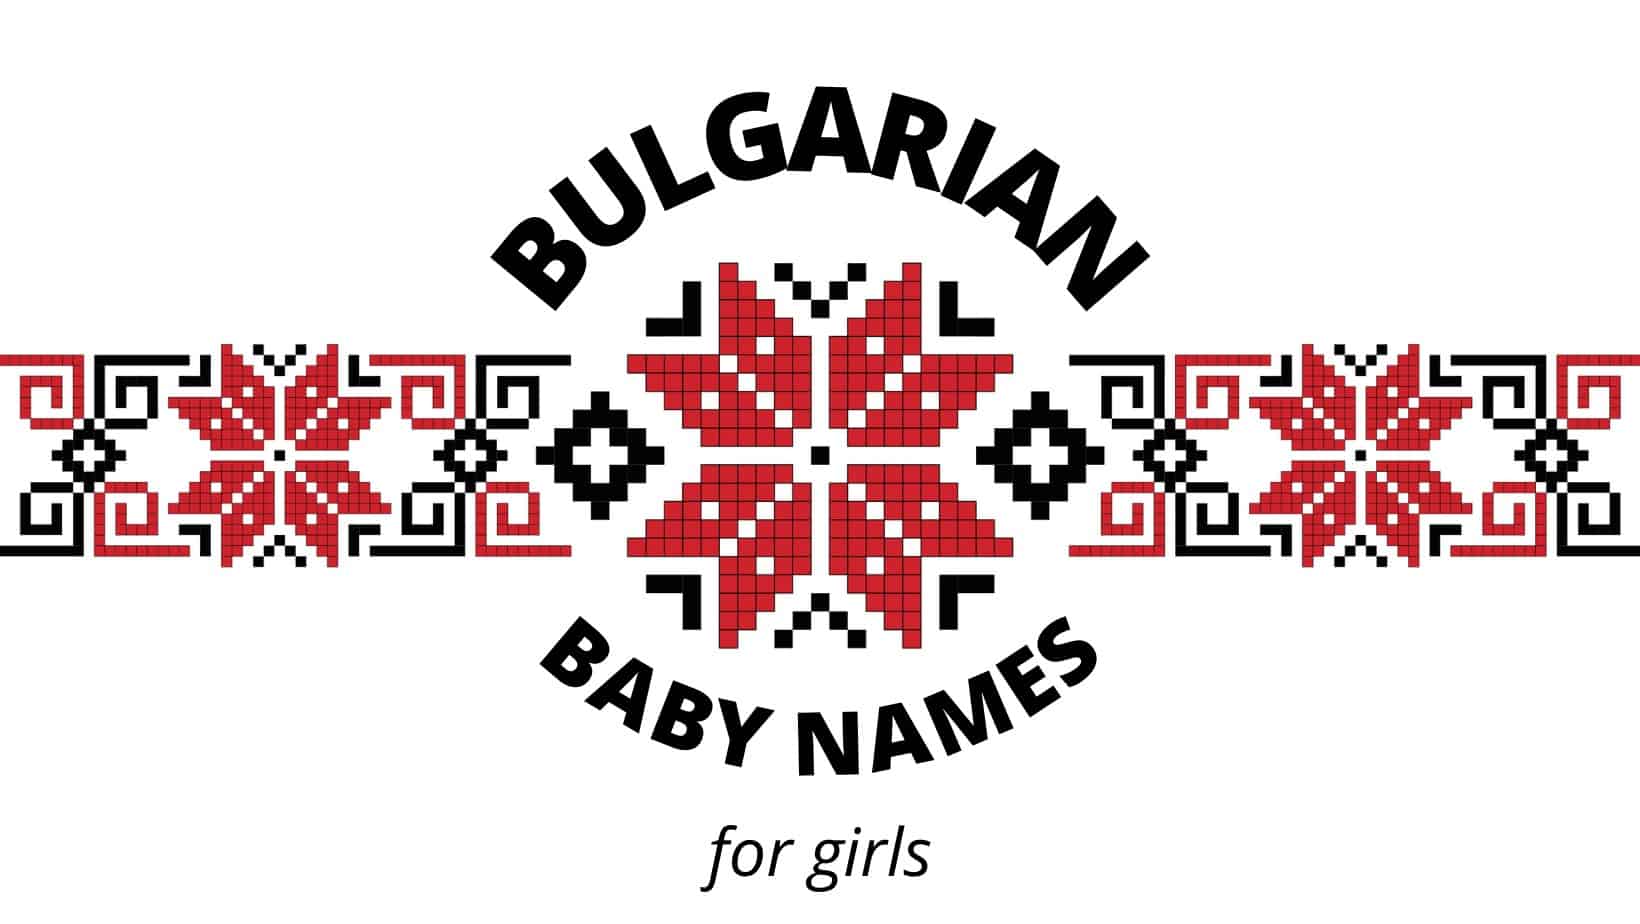 Bulgarian Baby Names for girls